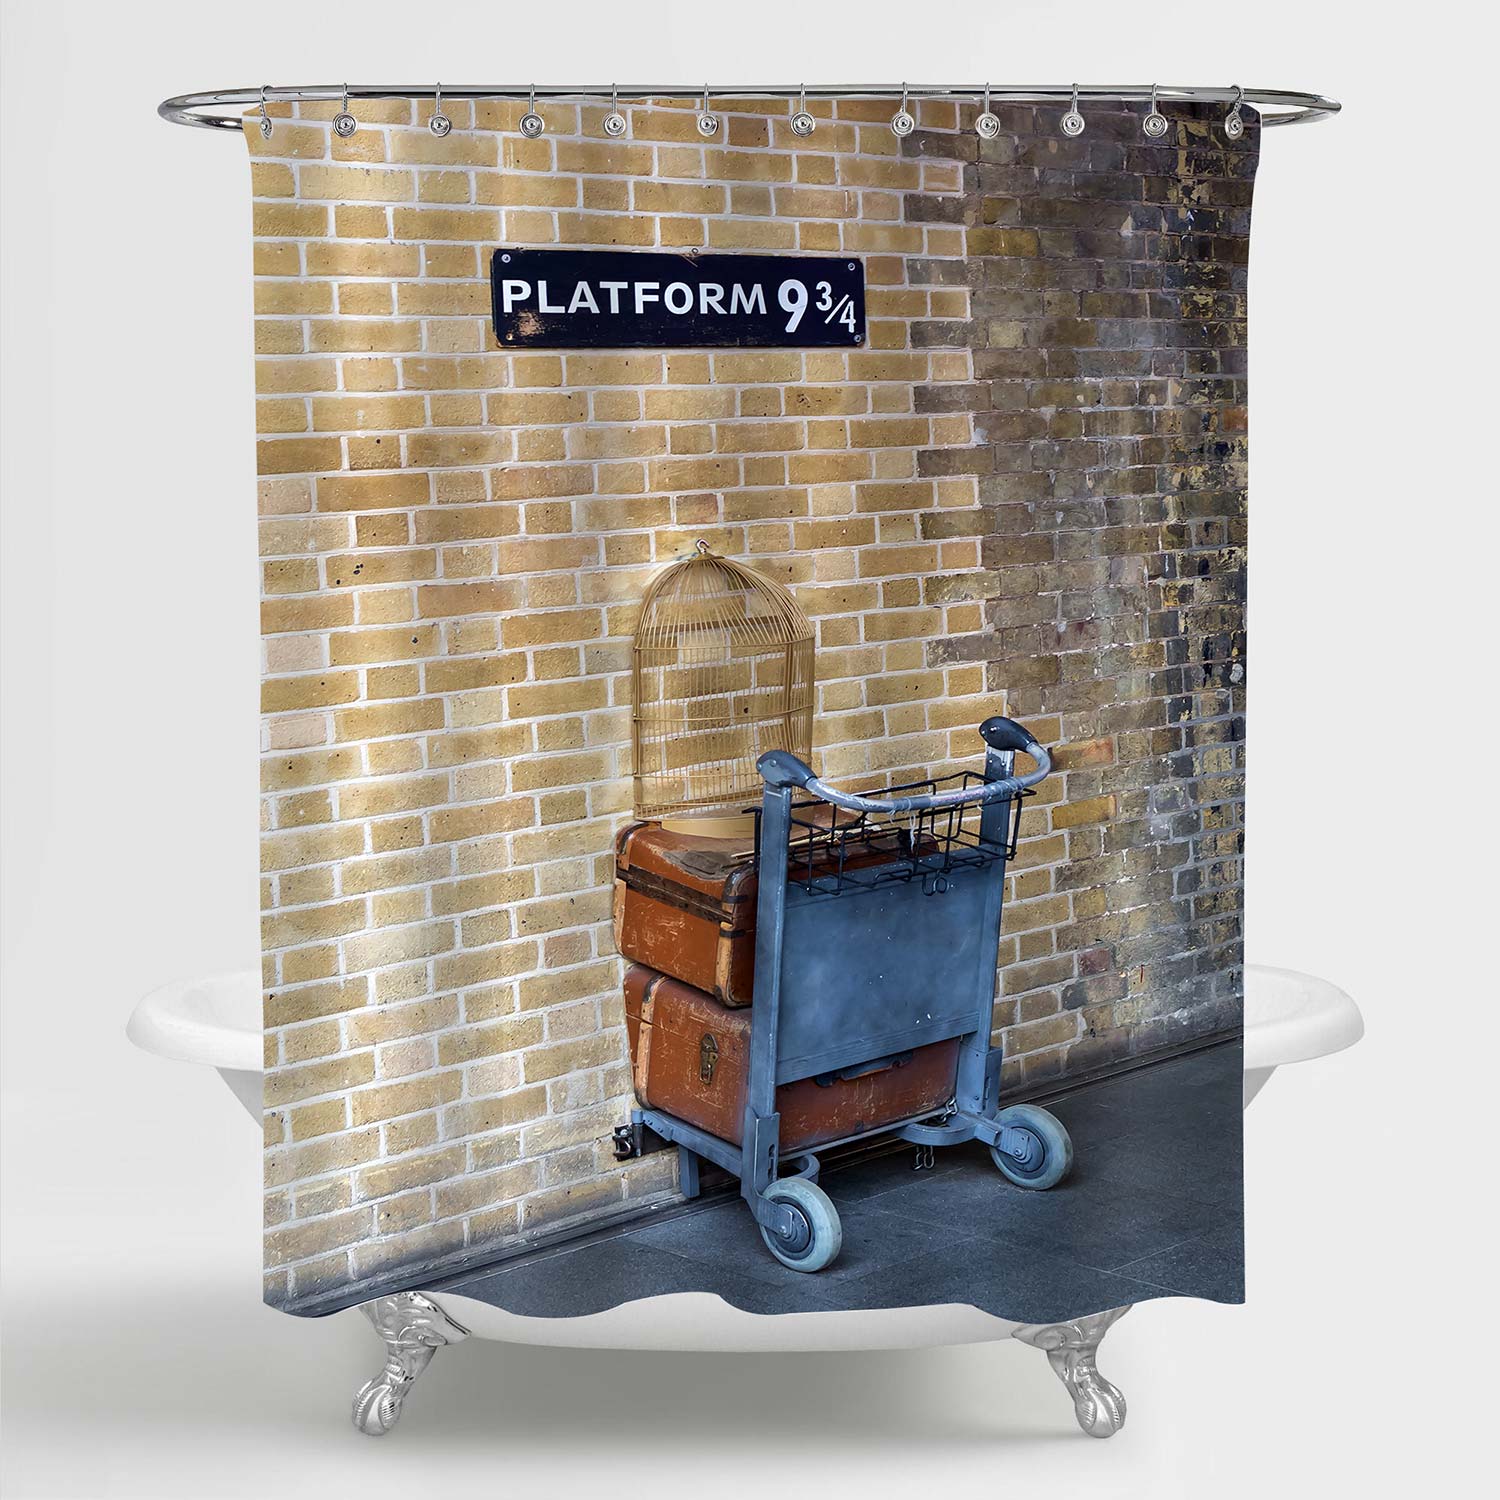 Harry Potter London King's Cross Station Platform 9 3/4 Shower